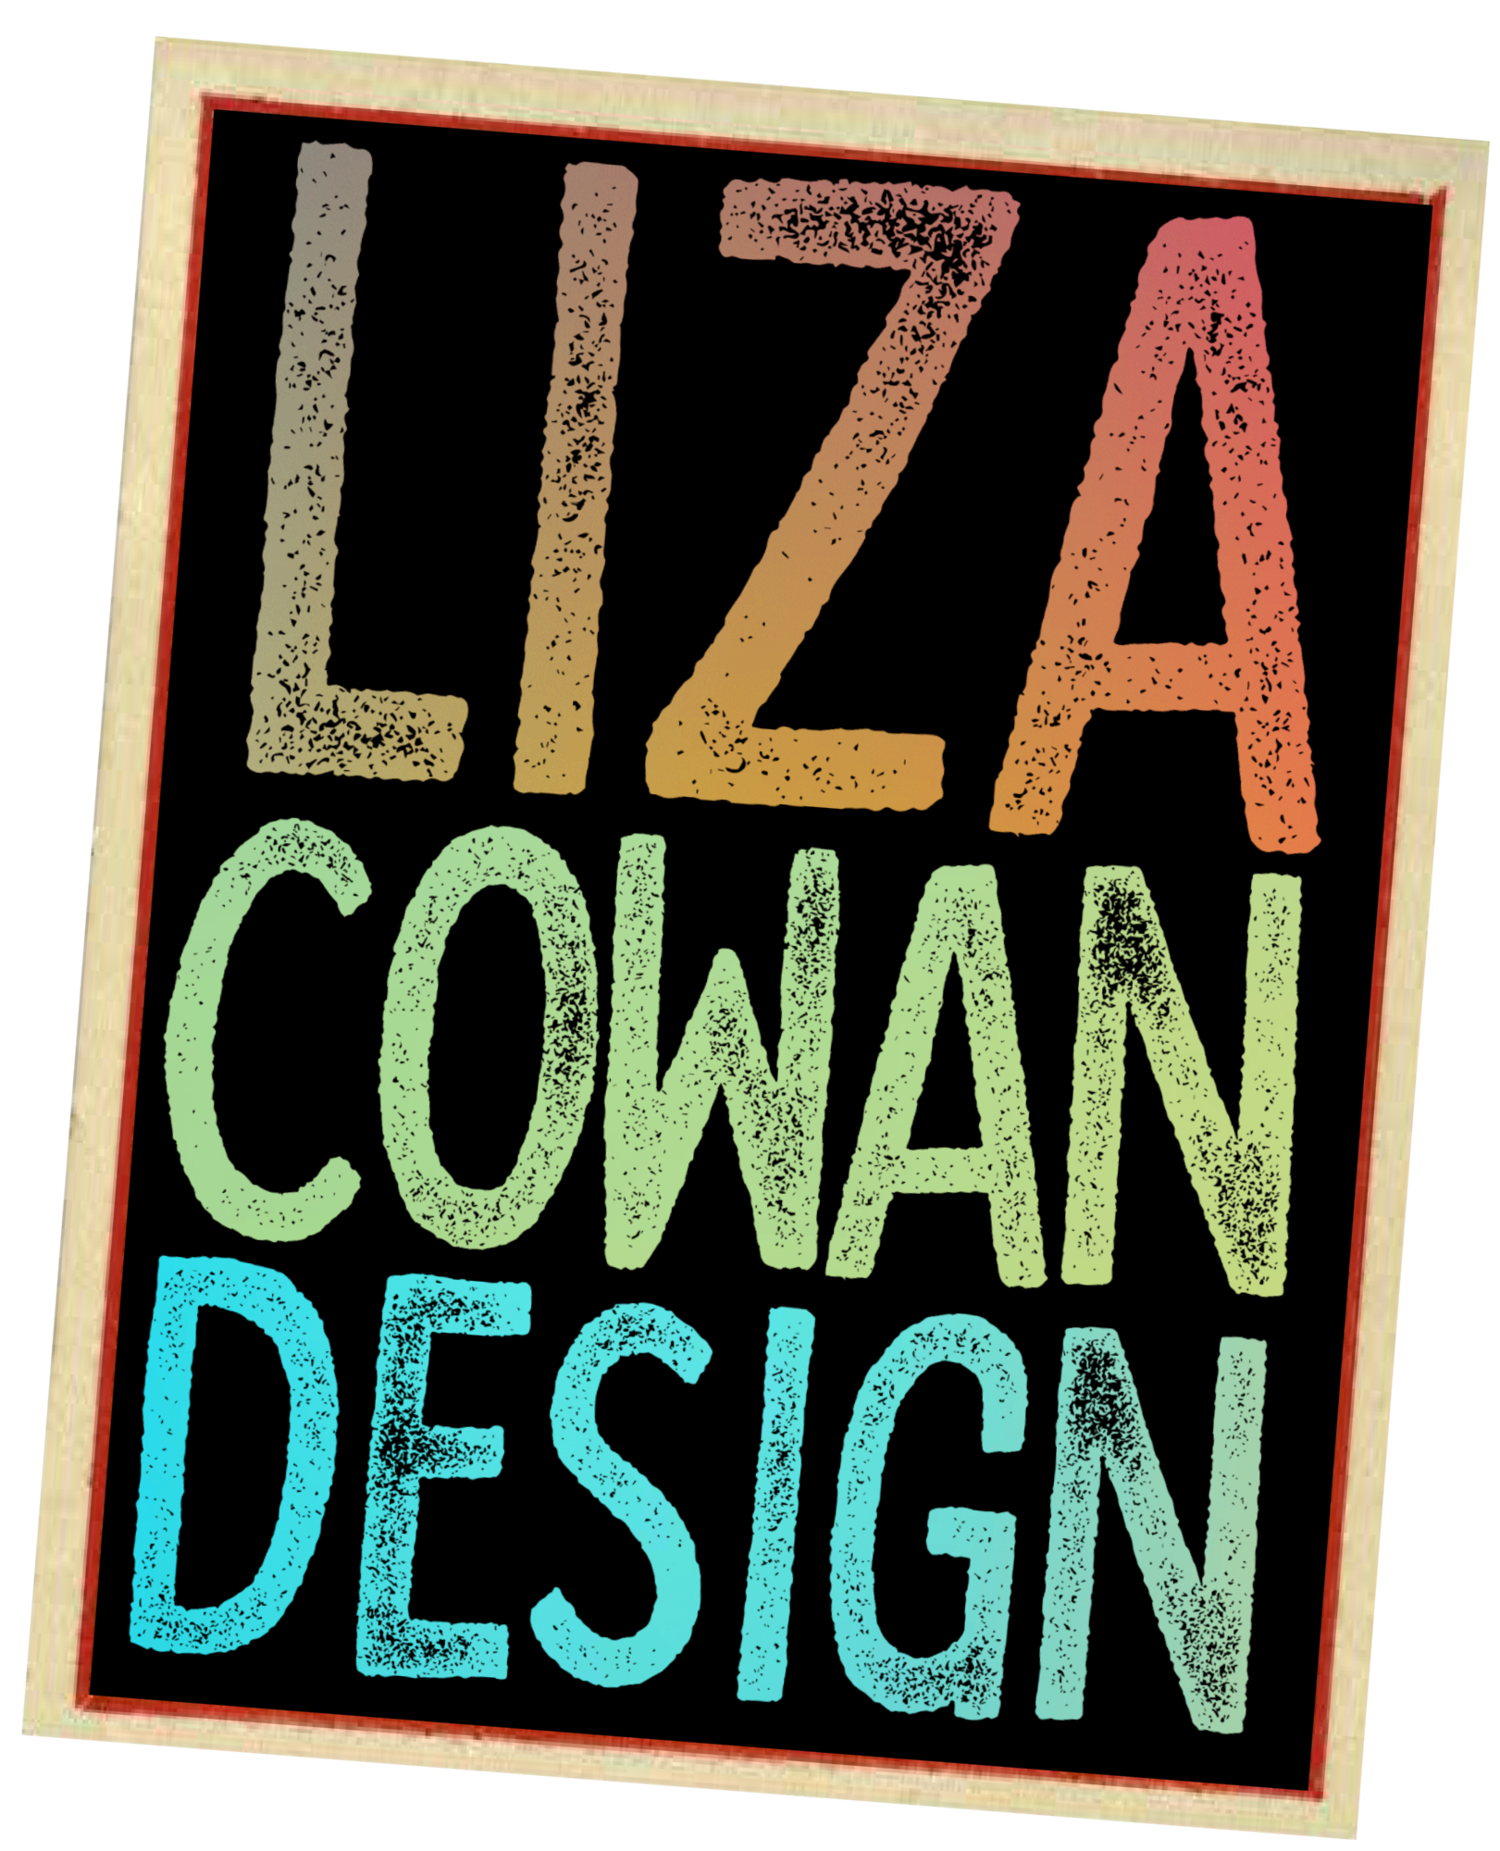 Liza Cowan Art + Design